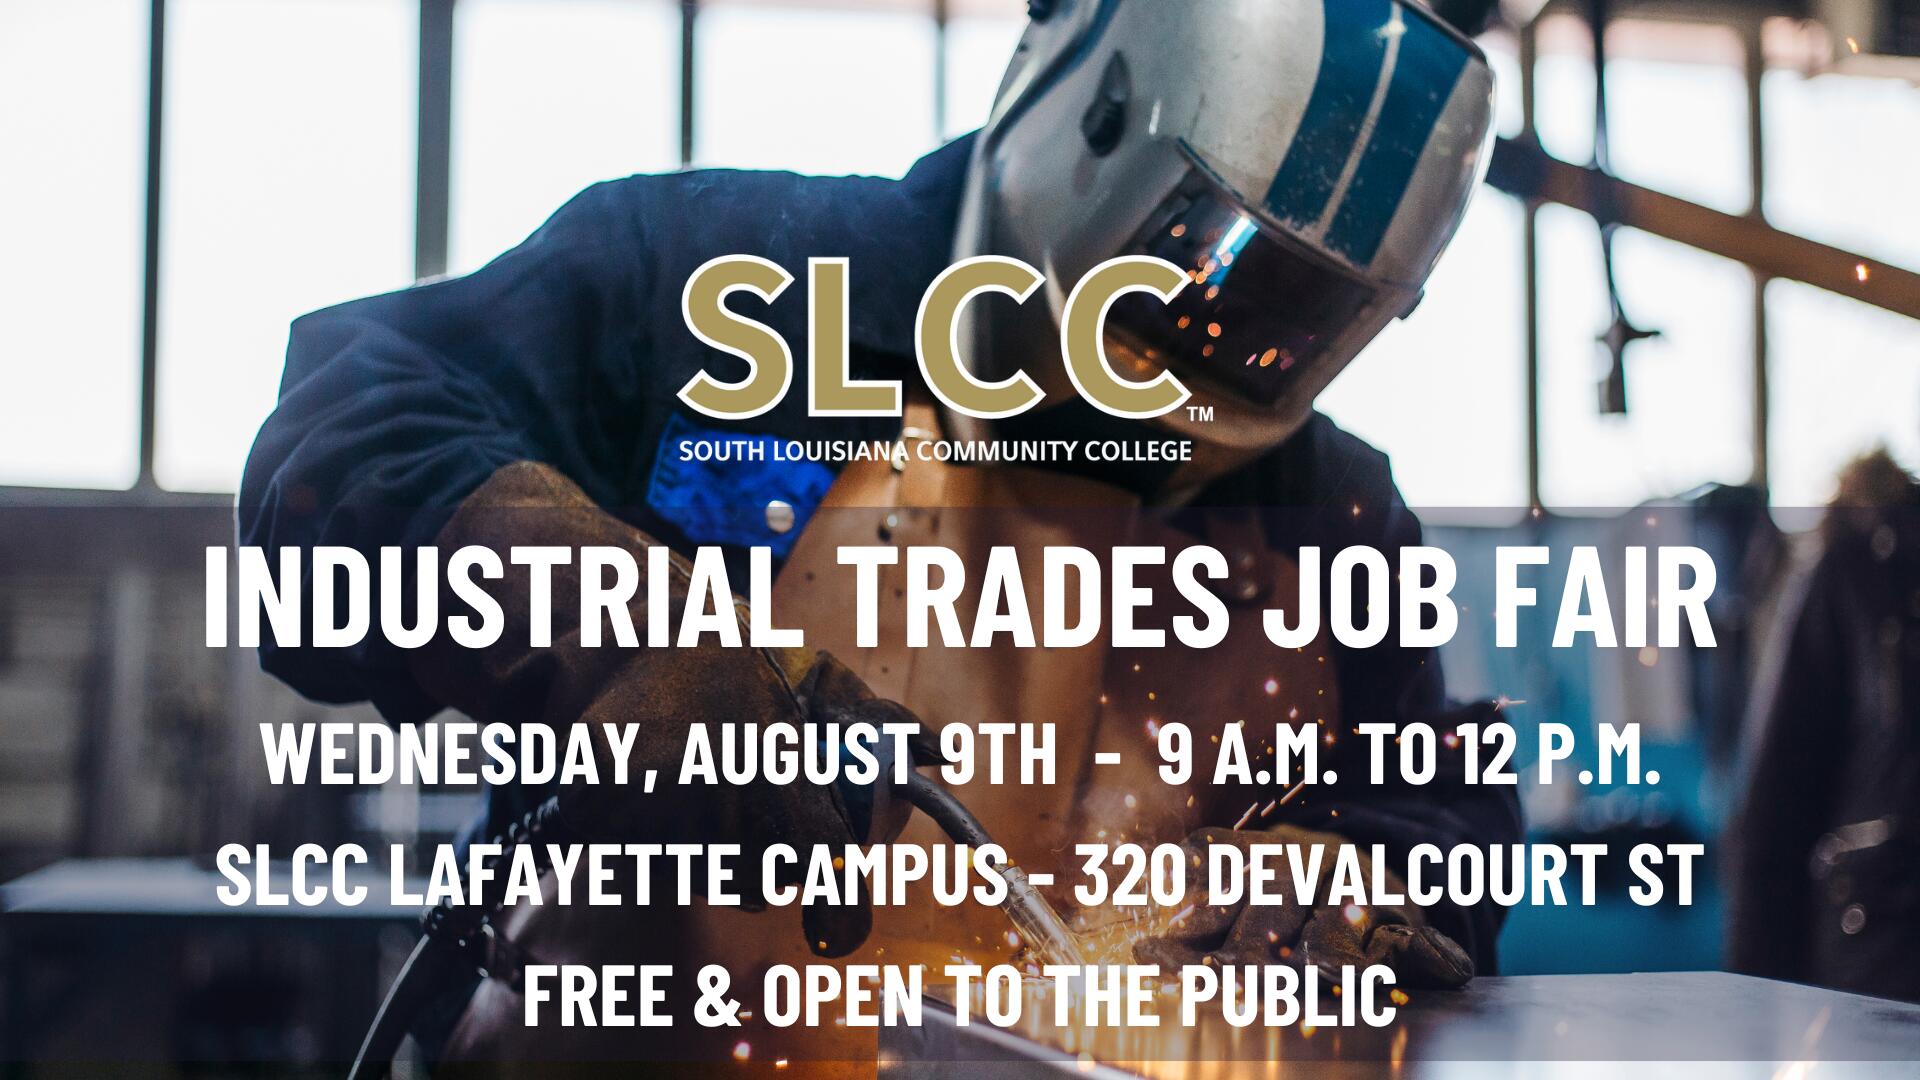 Industrial Trades Job Fair at SLCC